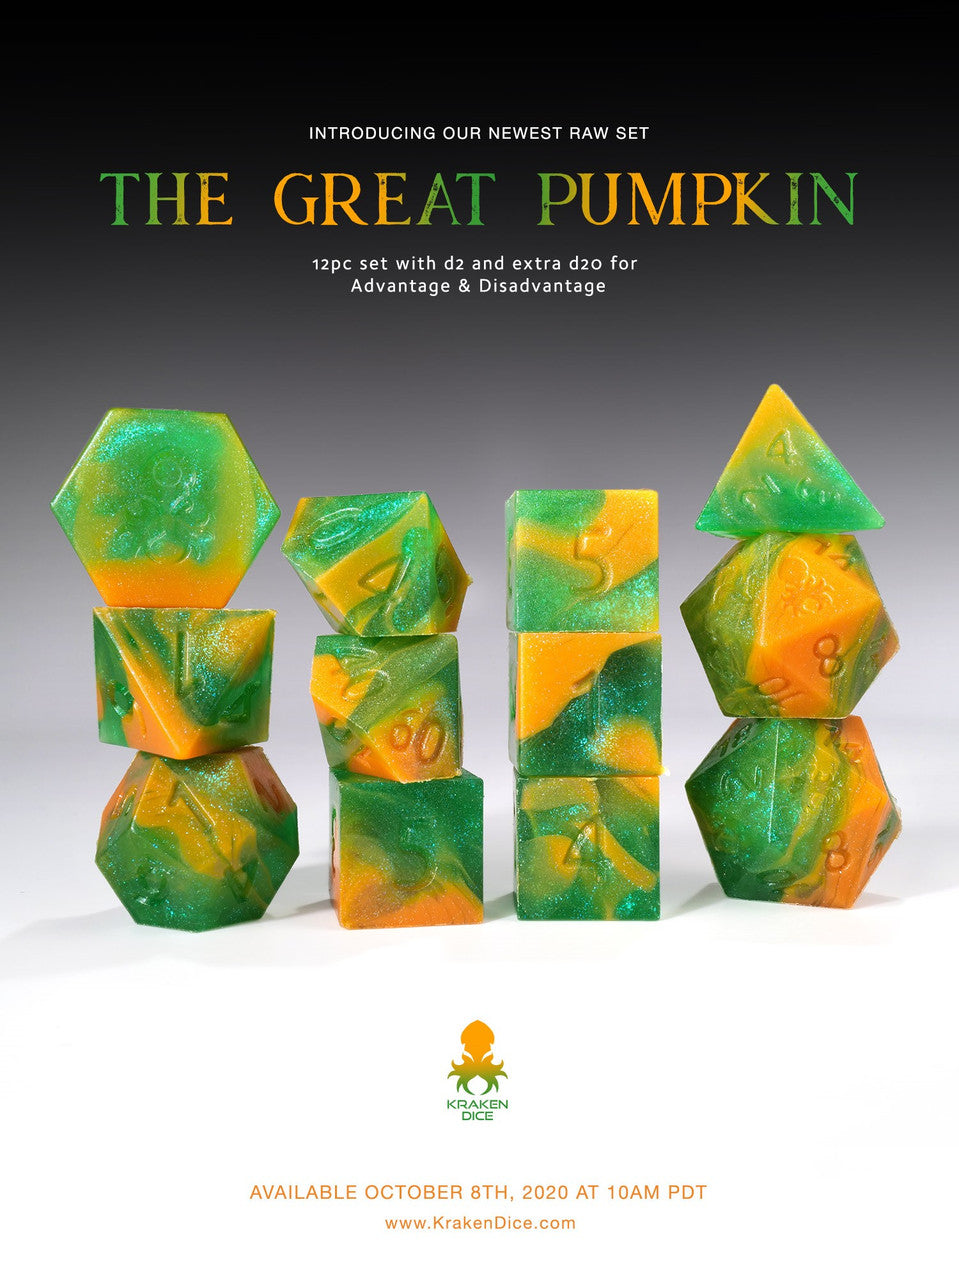 The Great Pumpkin RAW 12pc  RPG Dice Set